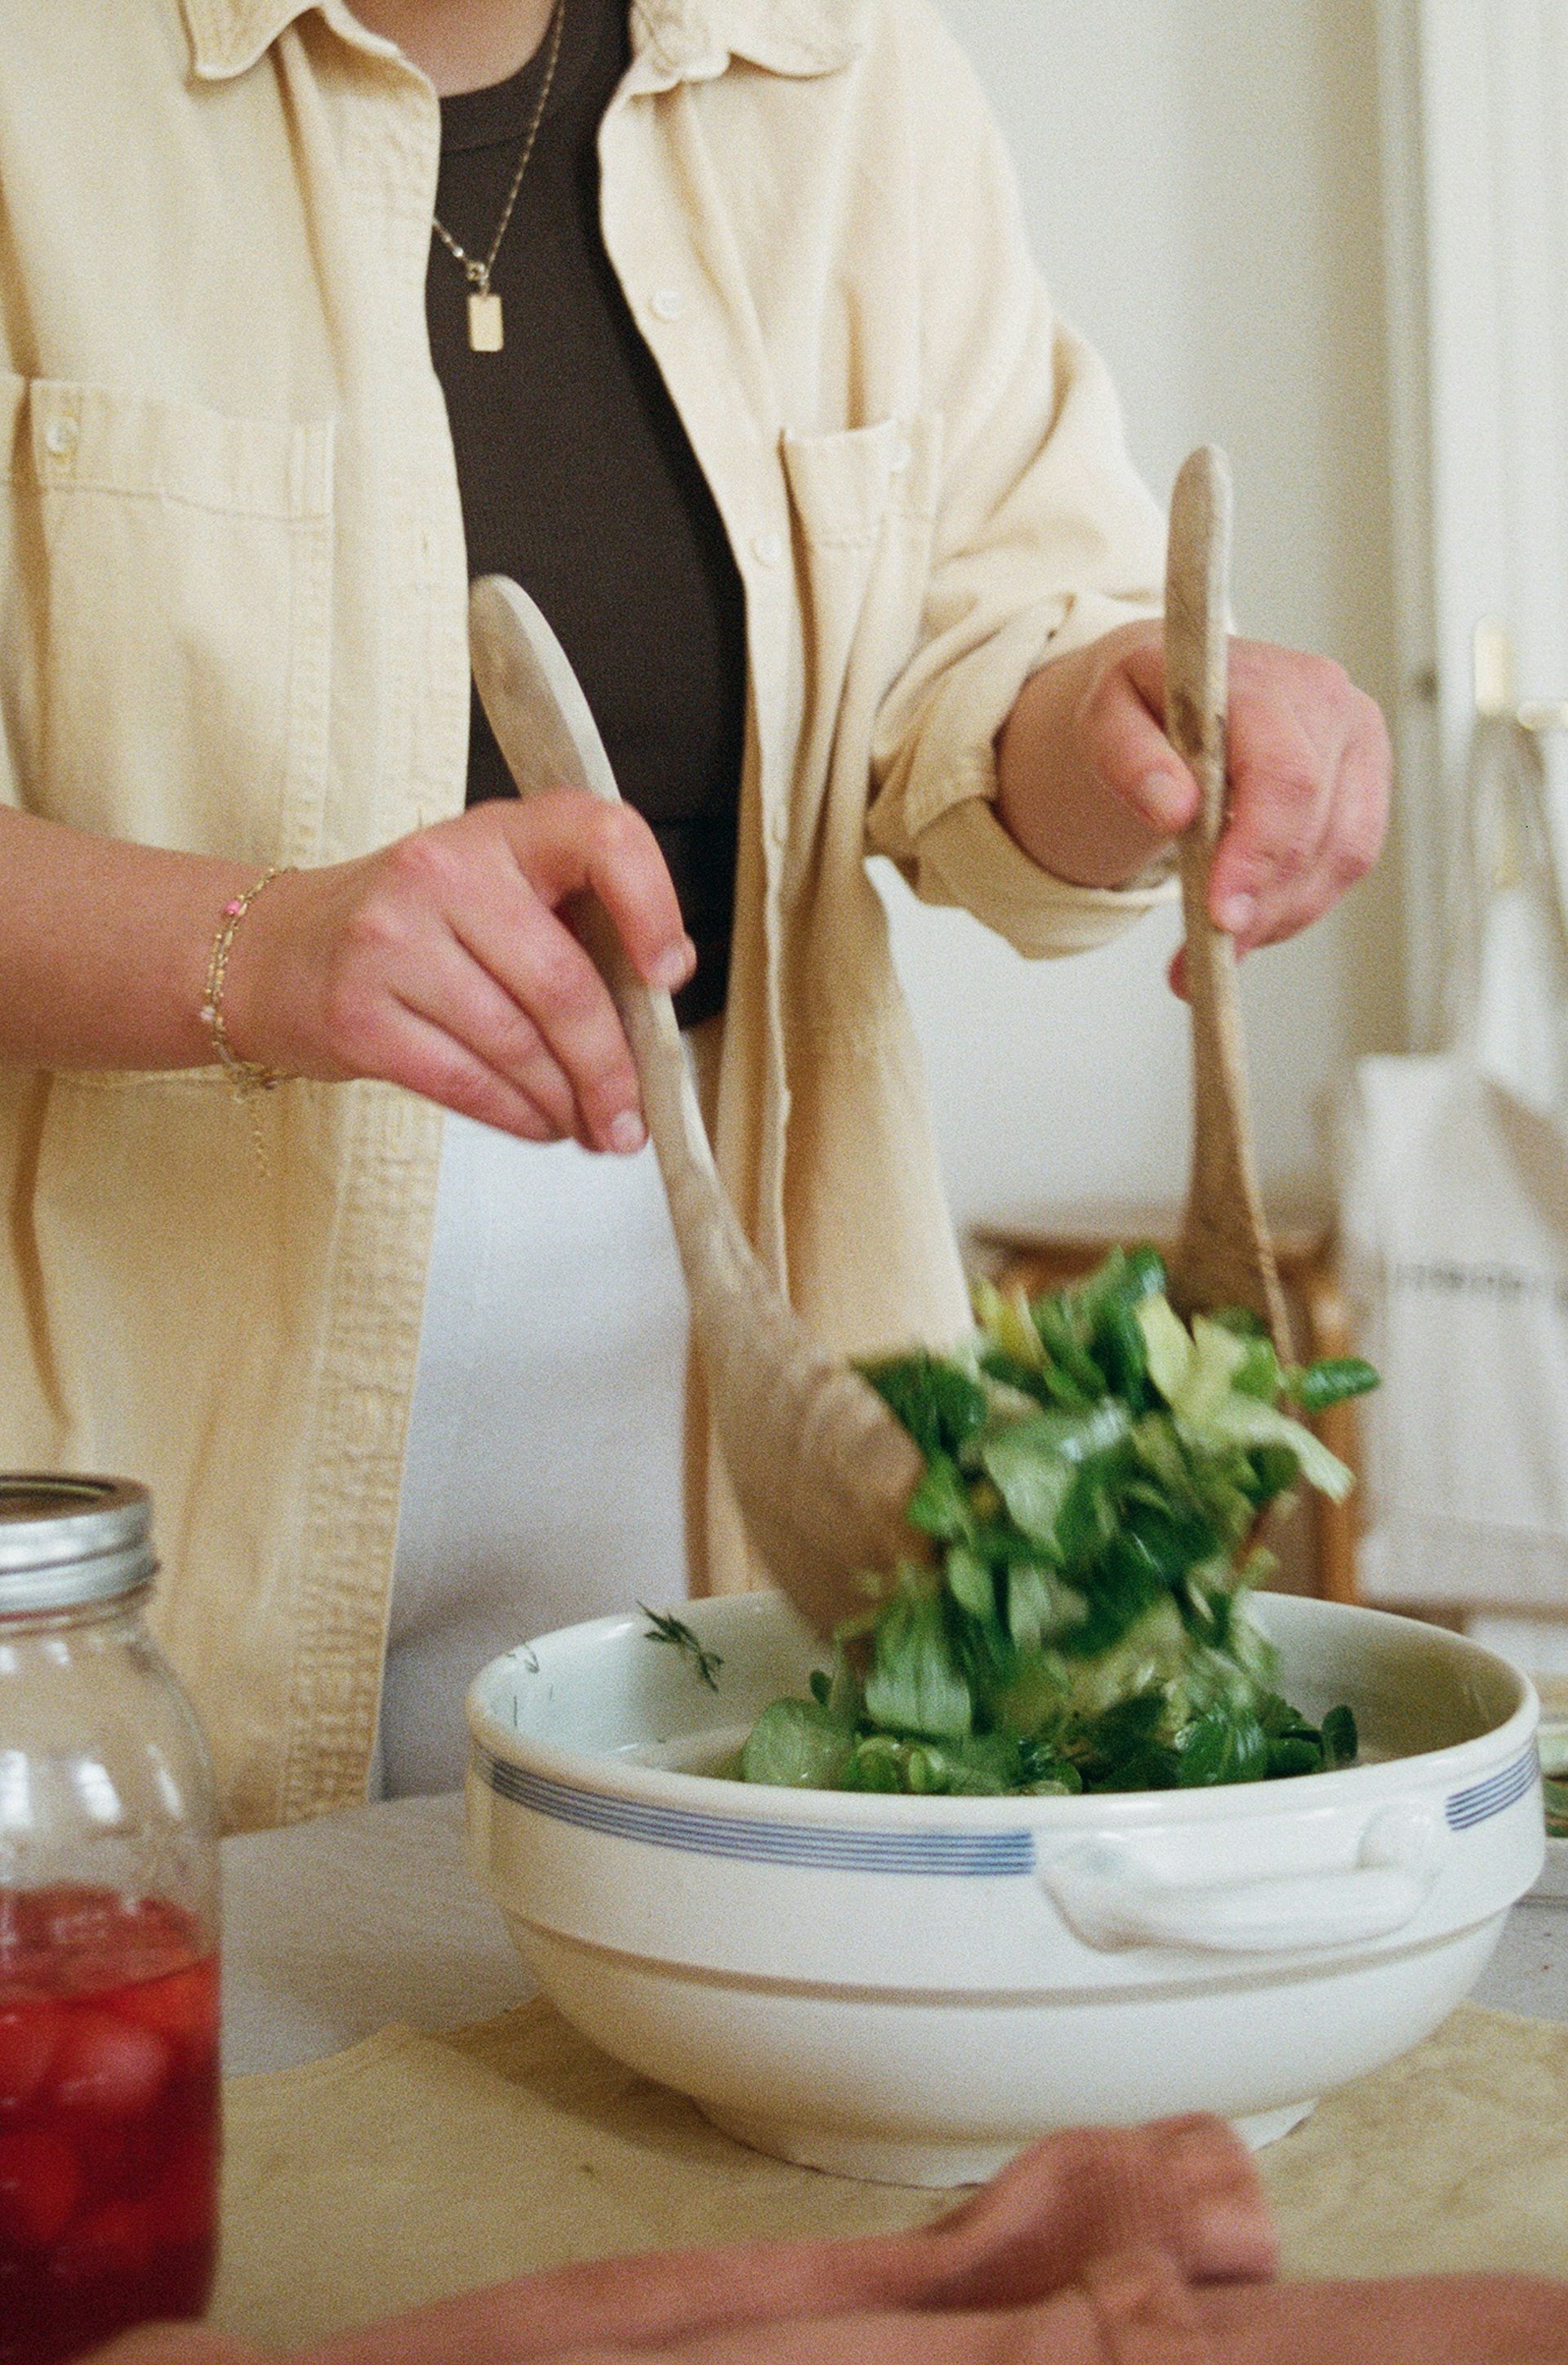 Frau vermischt Salat in Schüssel